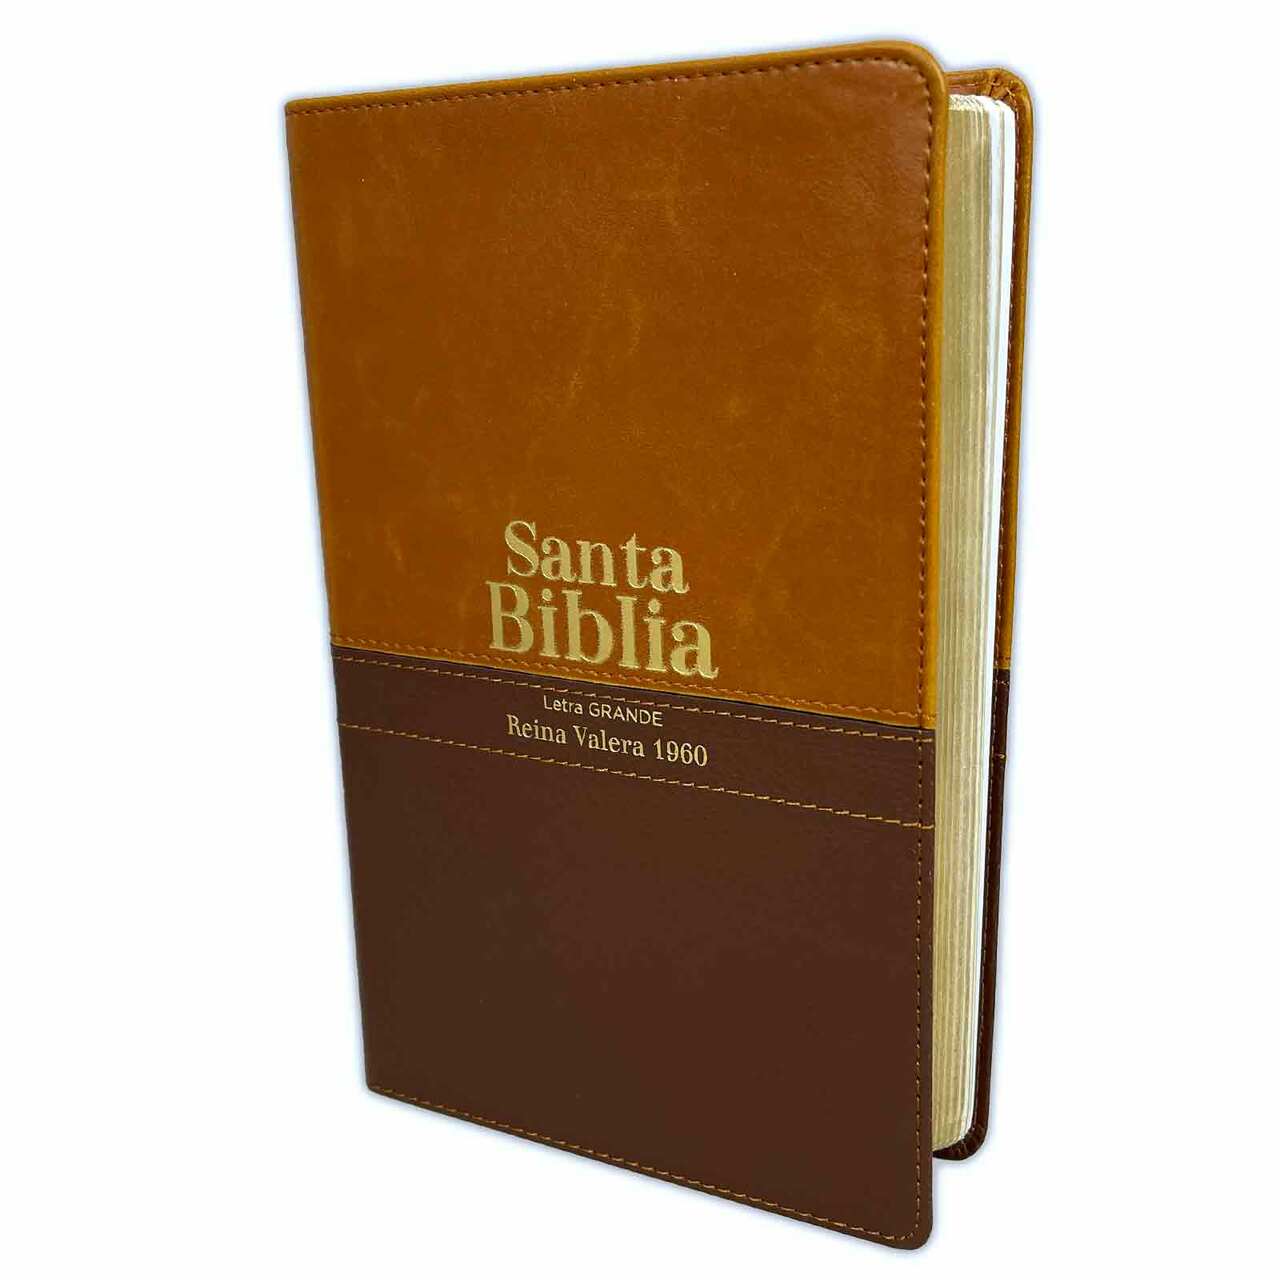 Biblia/RVR1960/Manual/Imitacion/Bitono/Cafe Claro-Cafe Oscuro